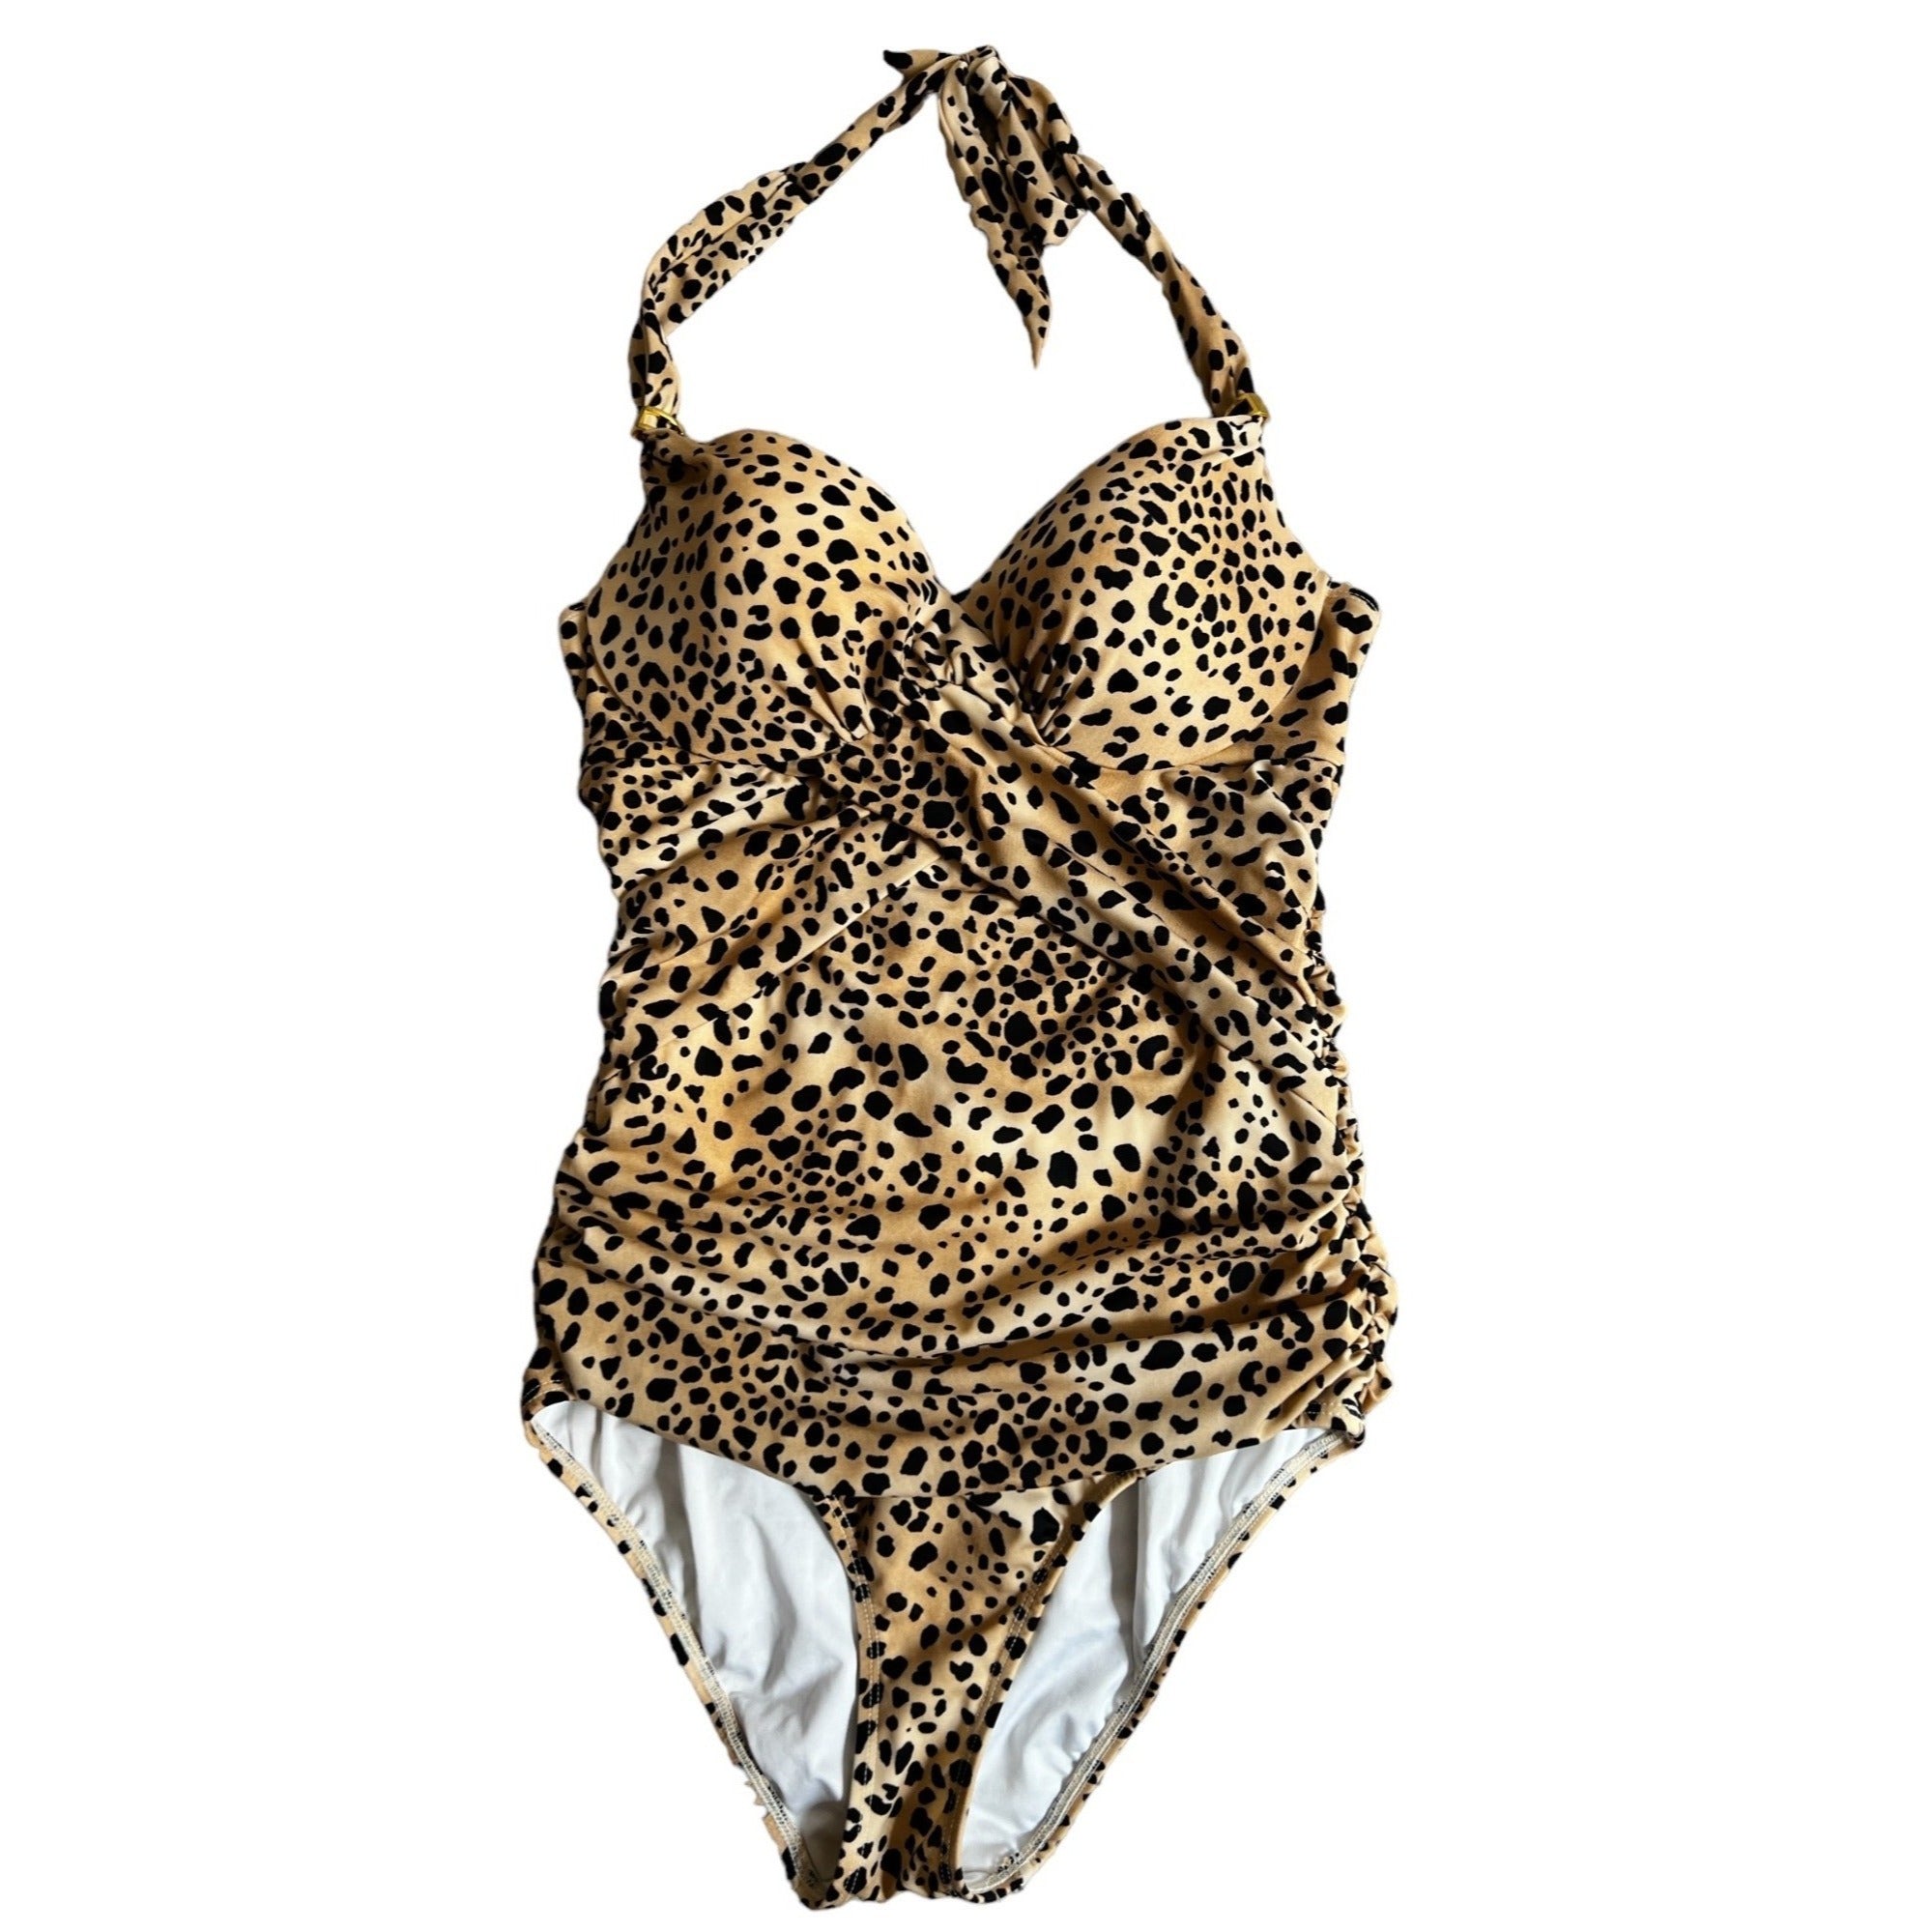 Victoria's Secret Leopard Animal Print Mold Cup One Piece Swimsuit Sz 6 A Womens